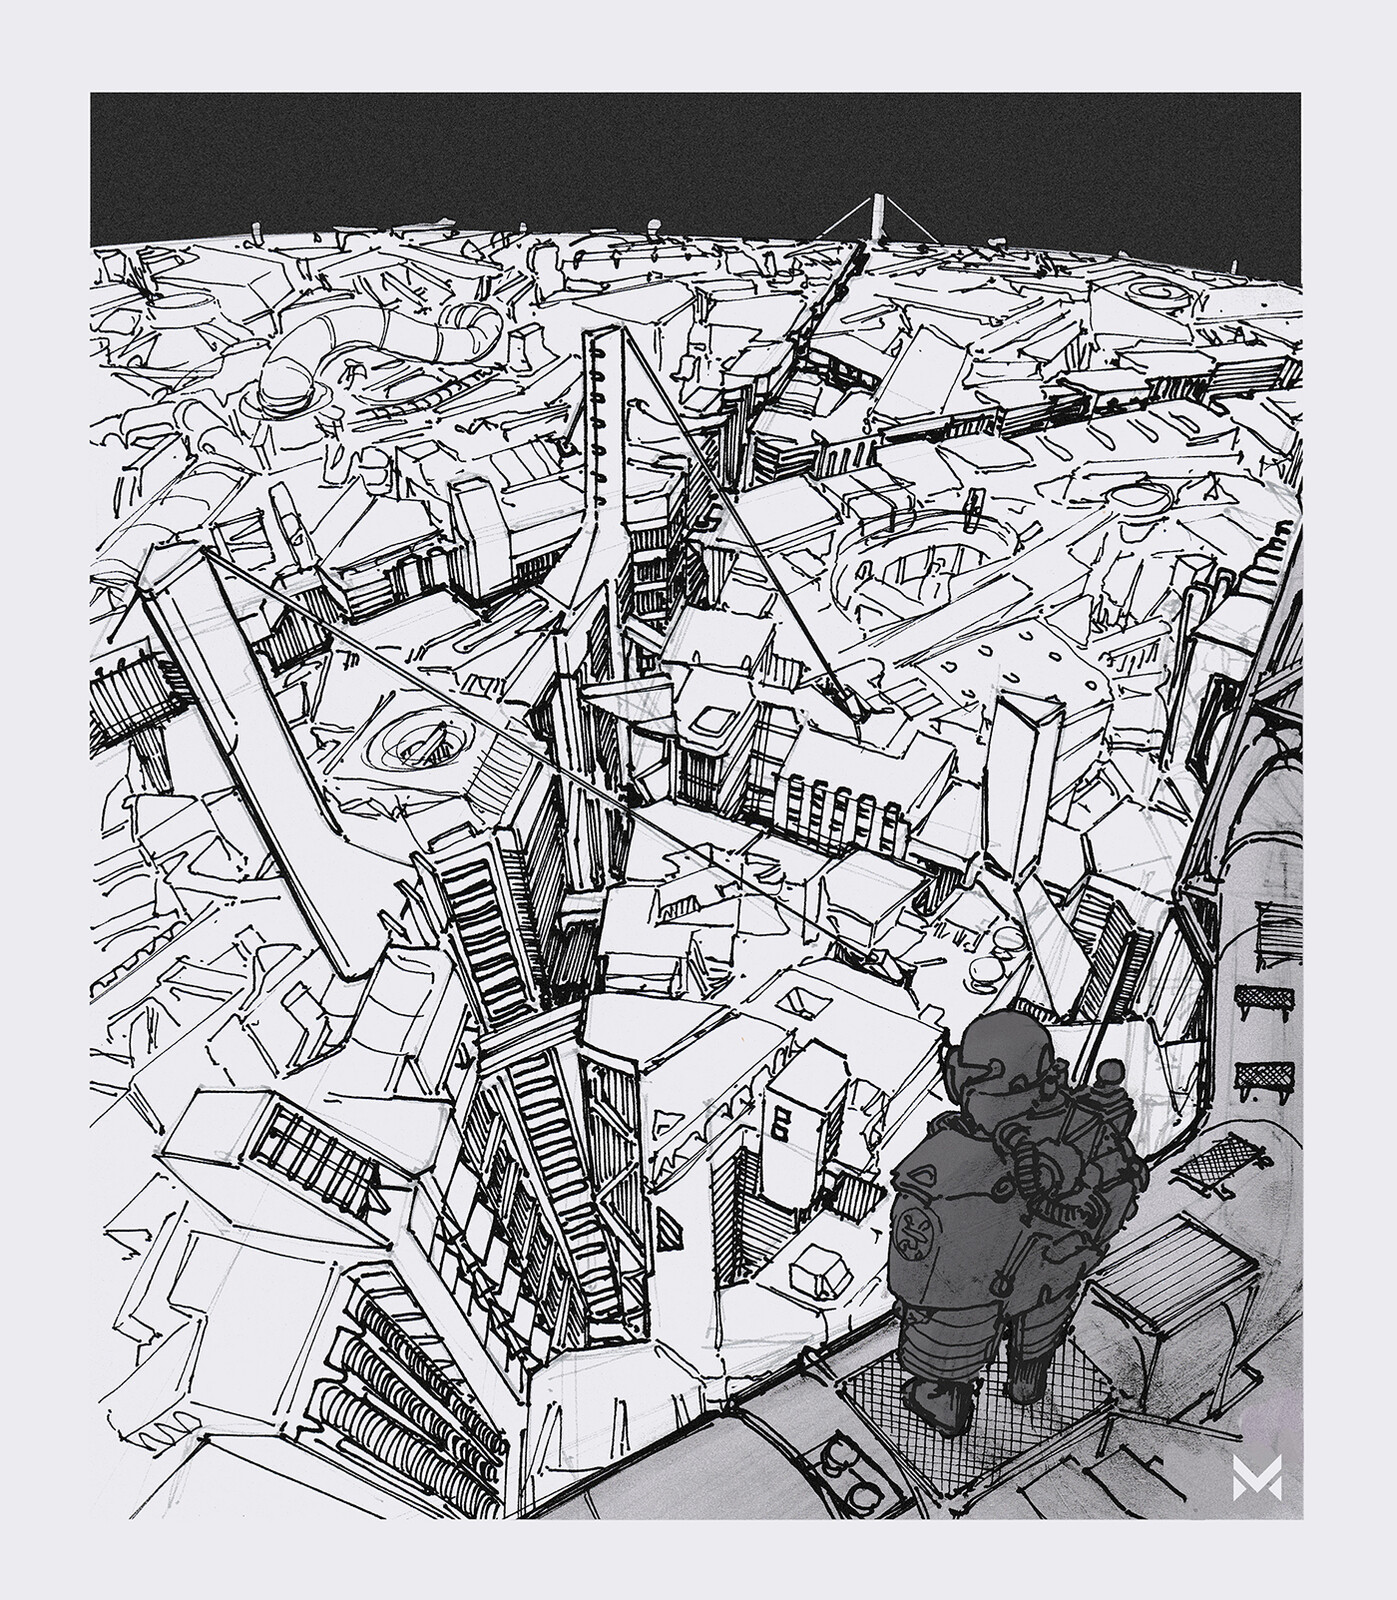 Megastructure-Venture  - inspired by Tsutomu Niheis manga epic 'Blame!'